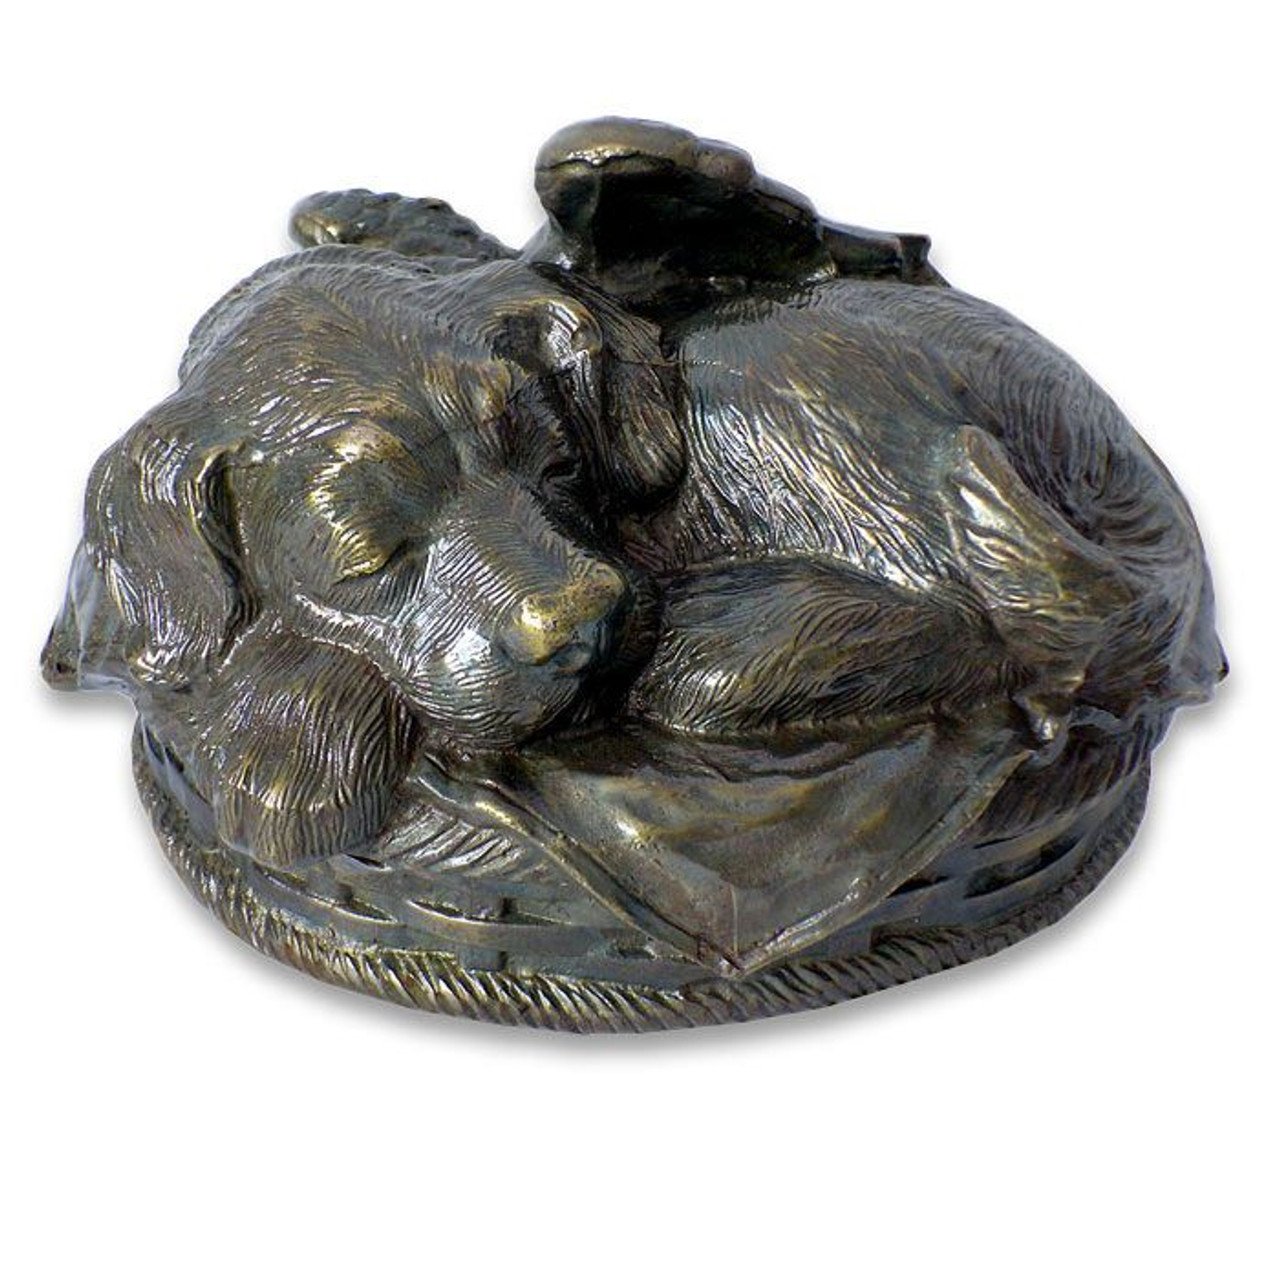 Cat Cremation Urn, Bronze Angel Urn for Ashes